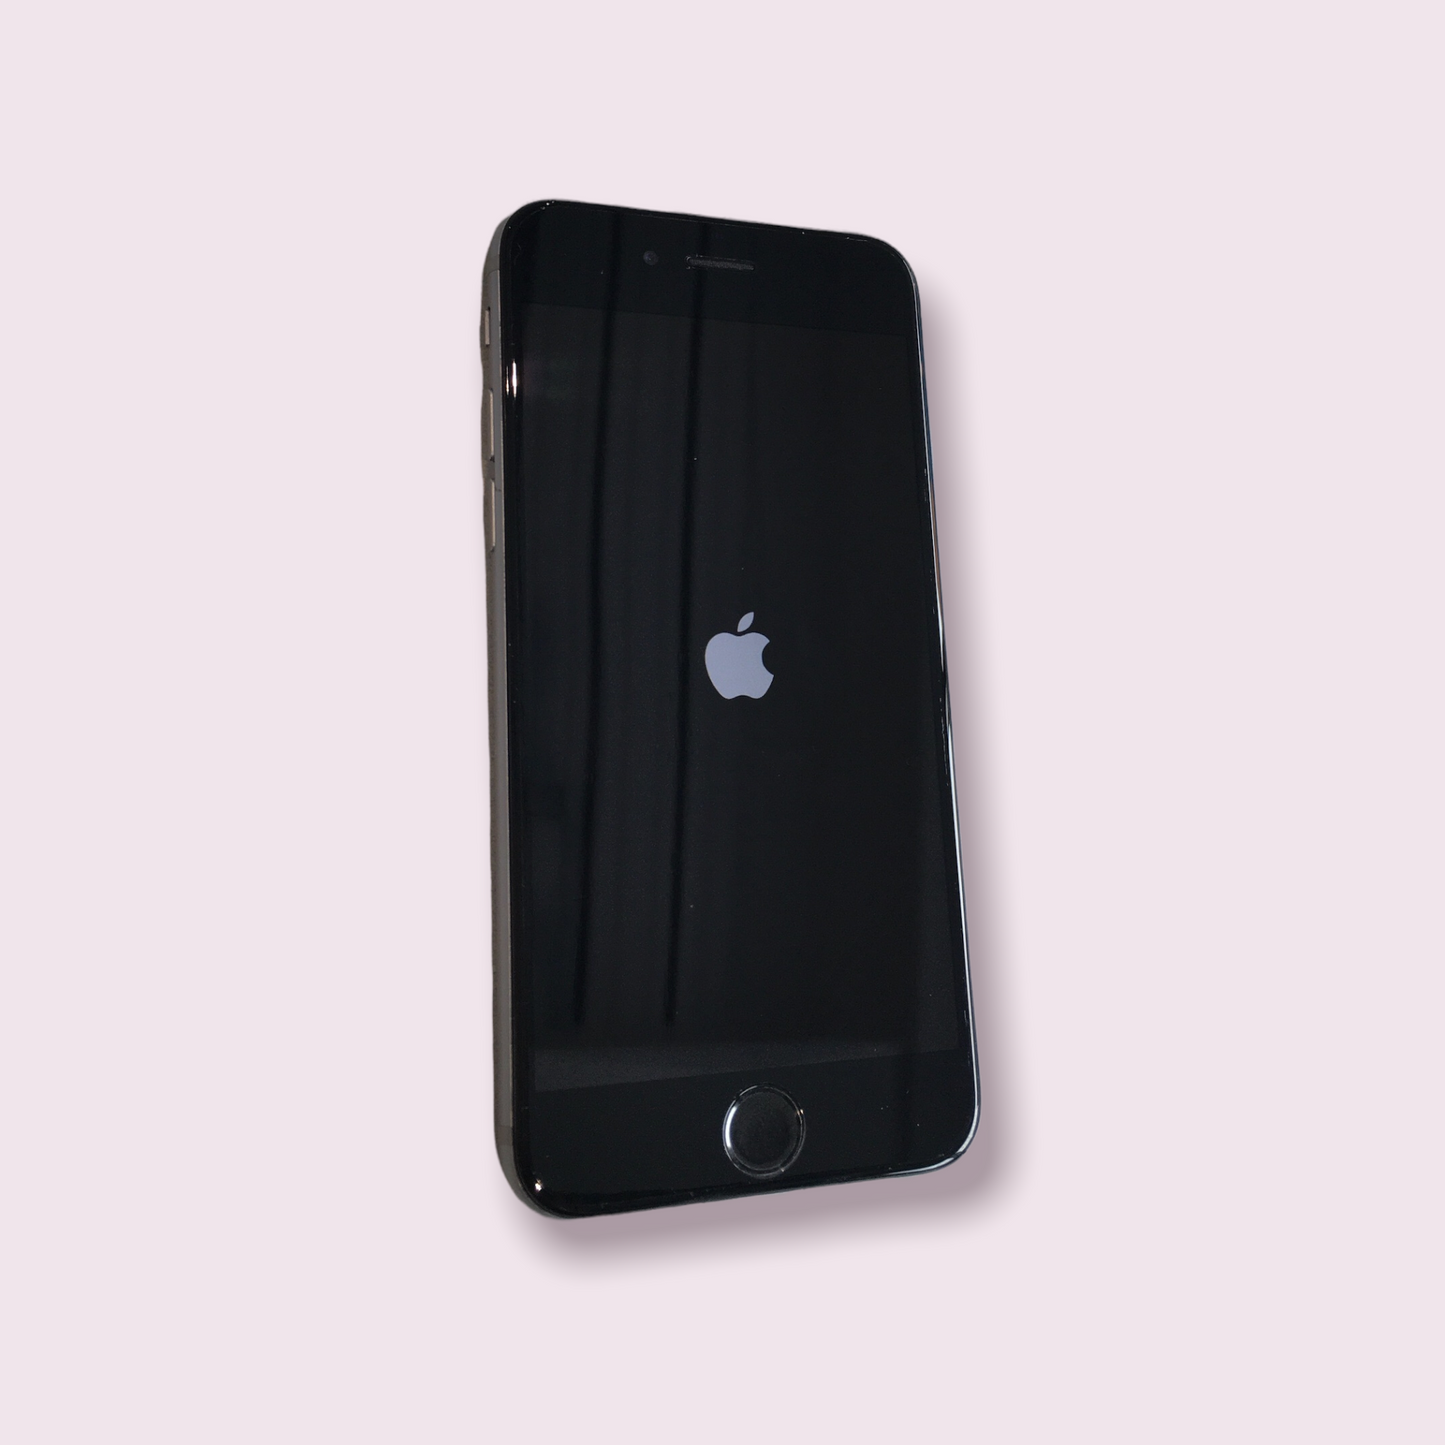 Apple iPhone 6S 32GB Space Grey - Unlocked - Grade B+